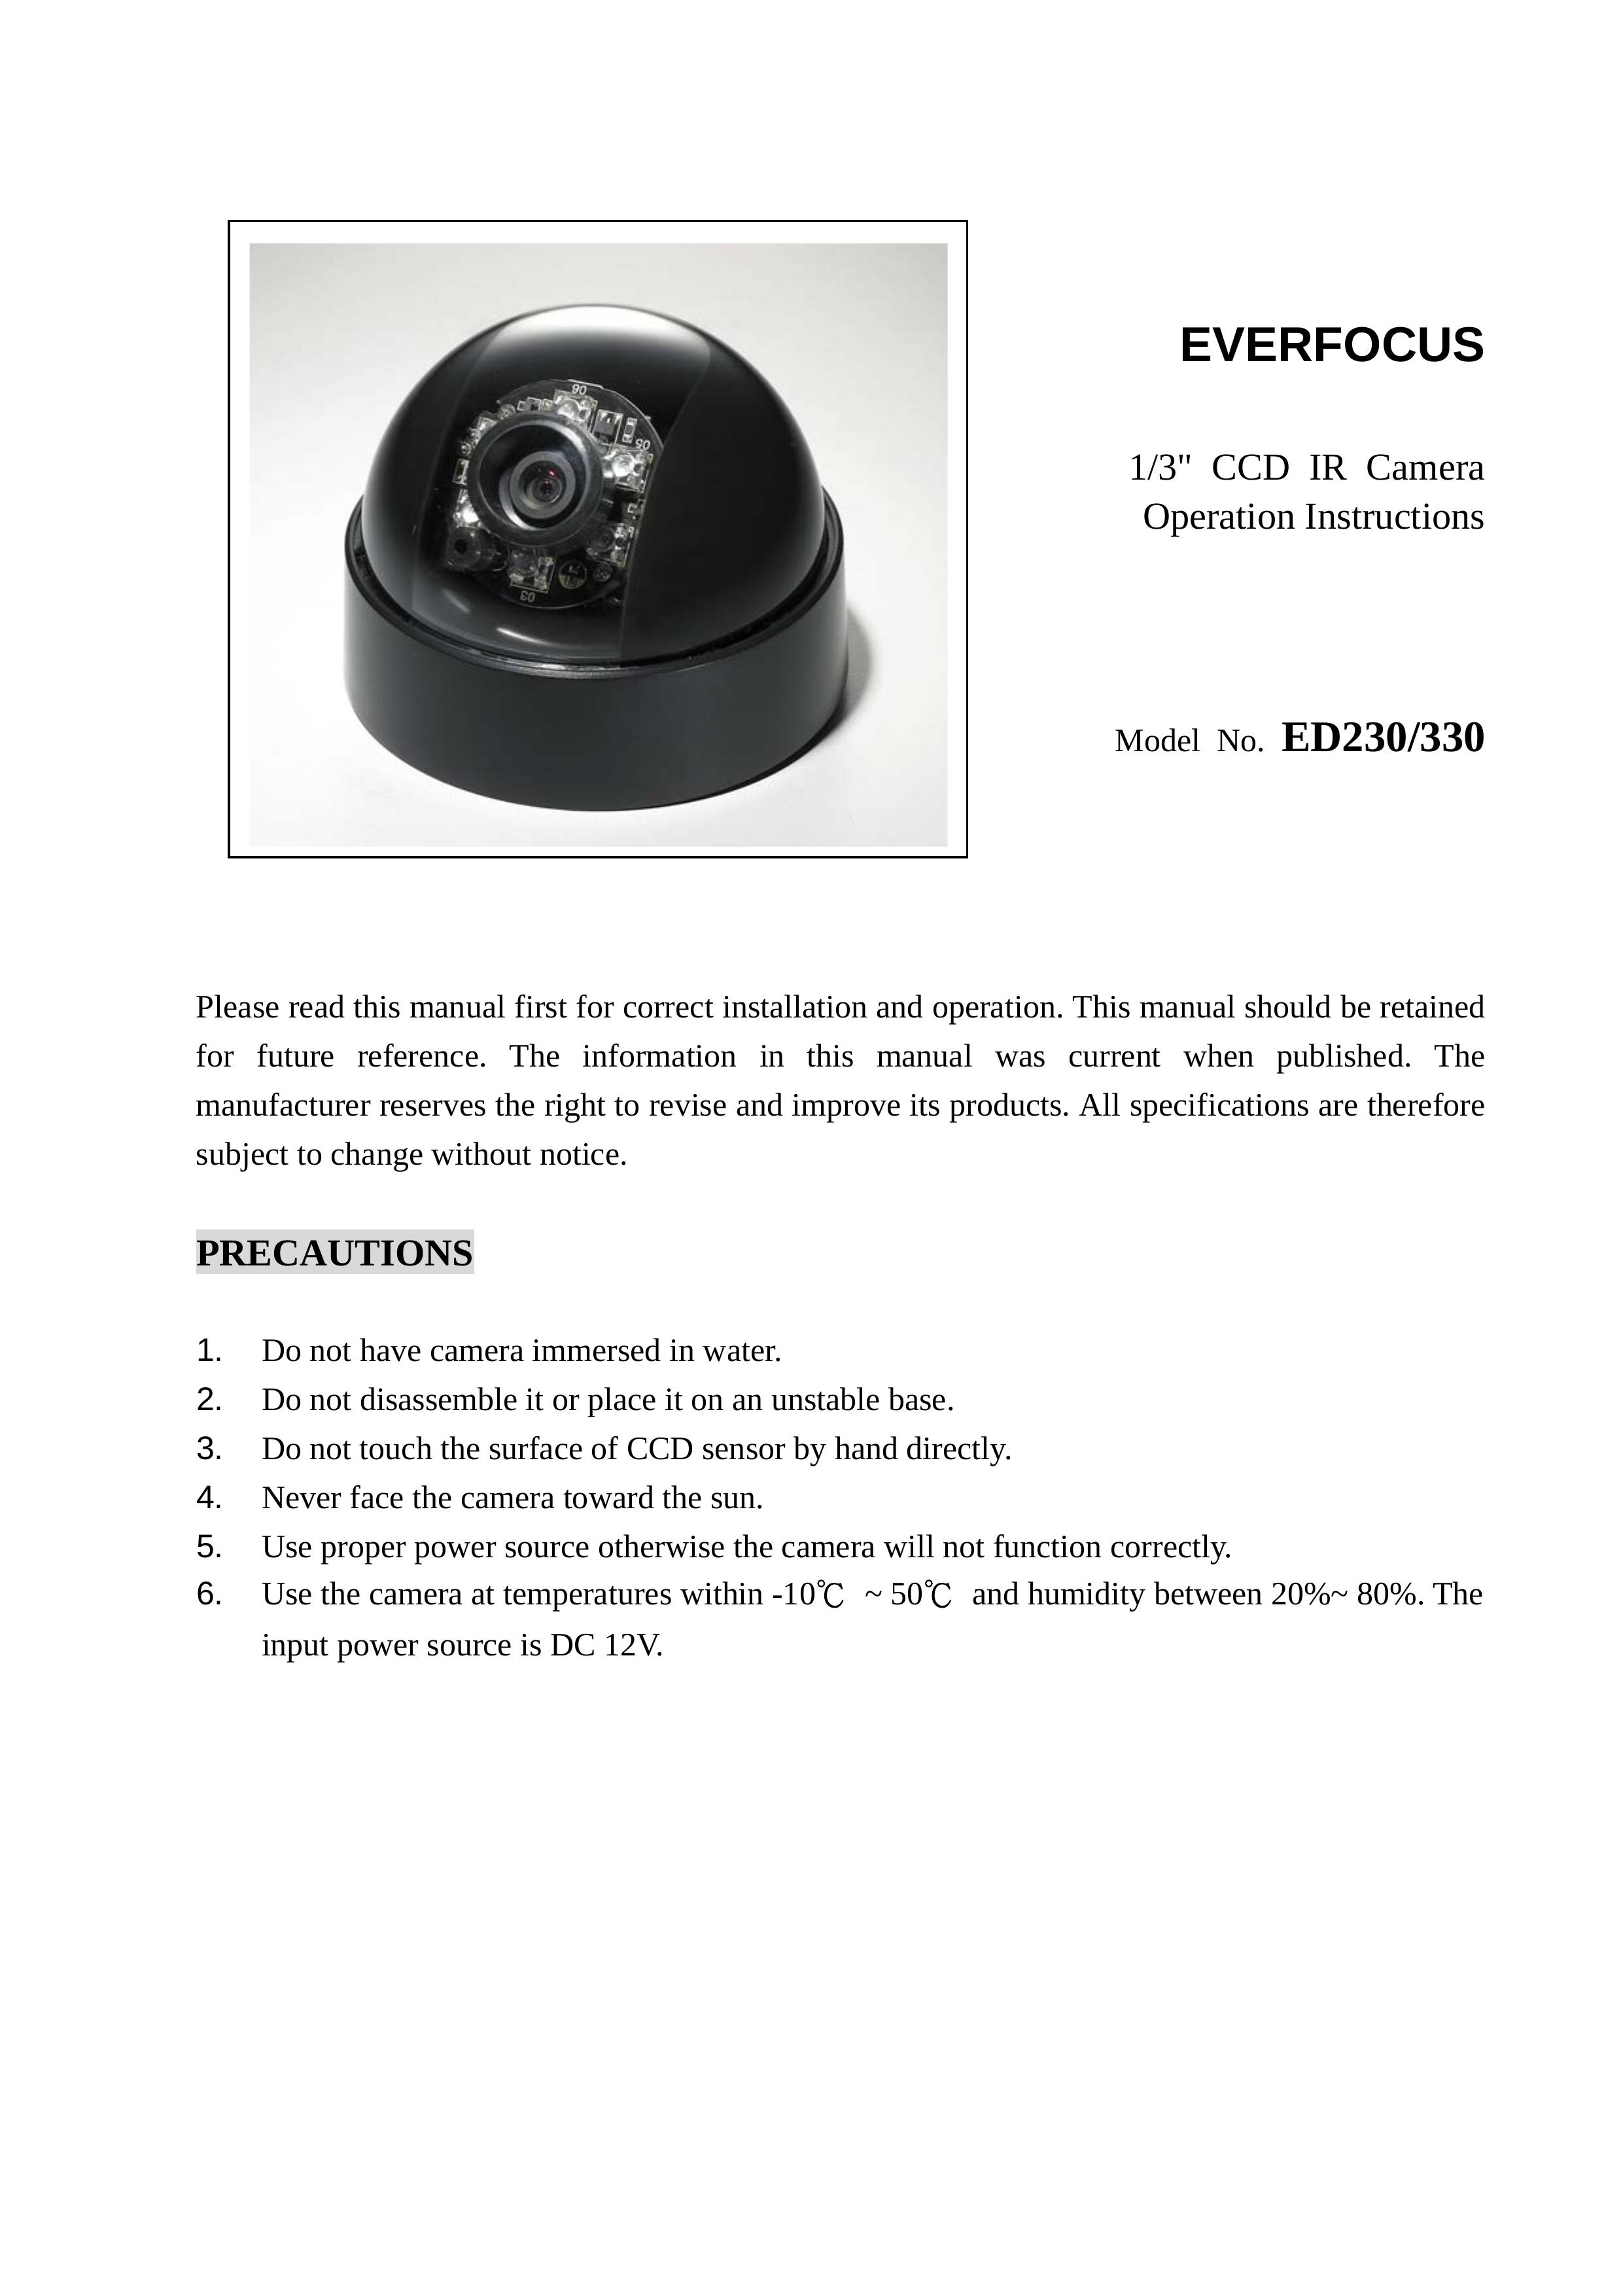 EverFocus ED230 Security Camera User Manual